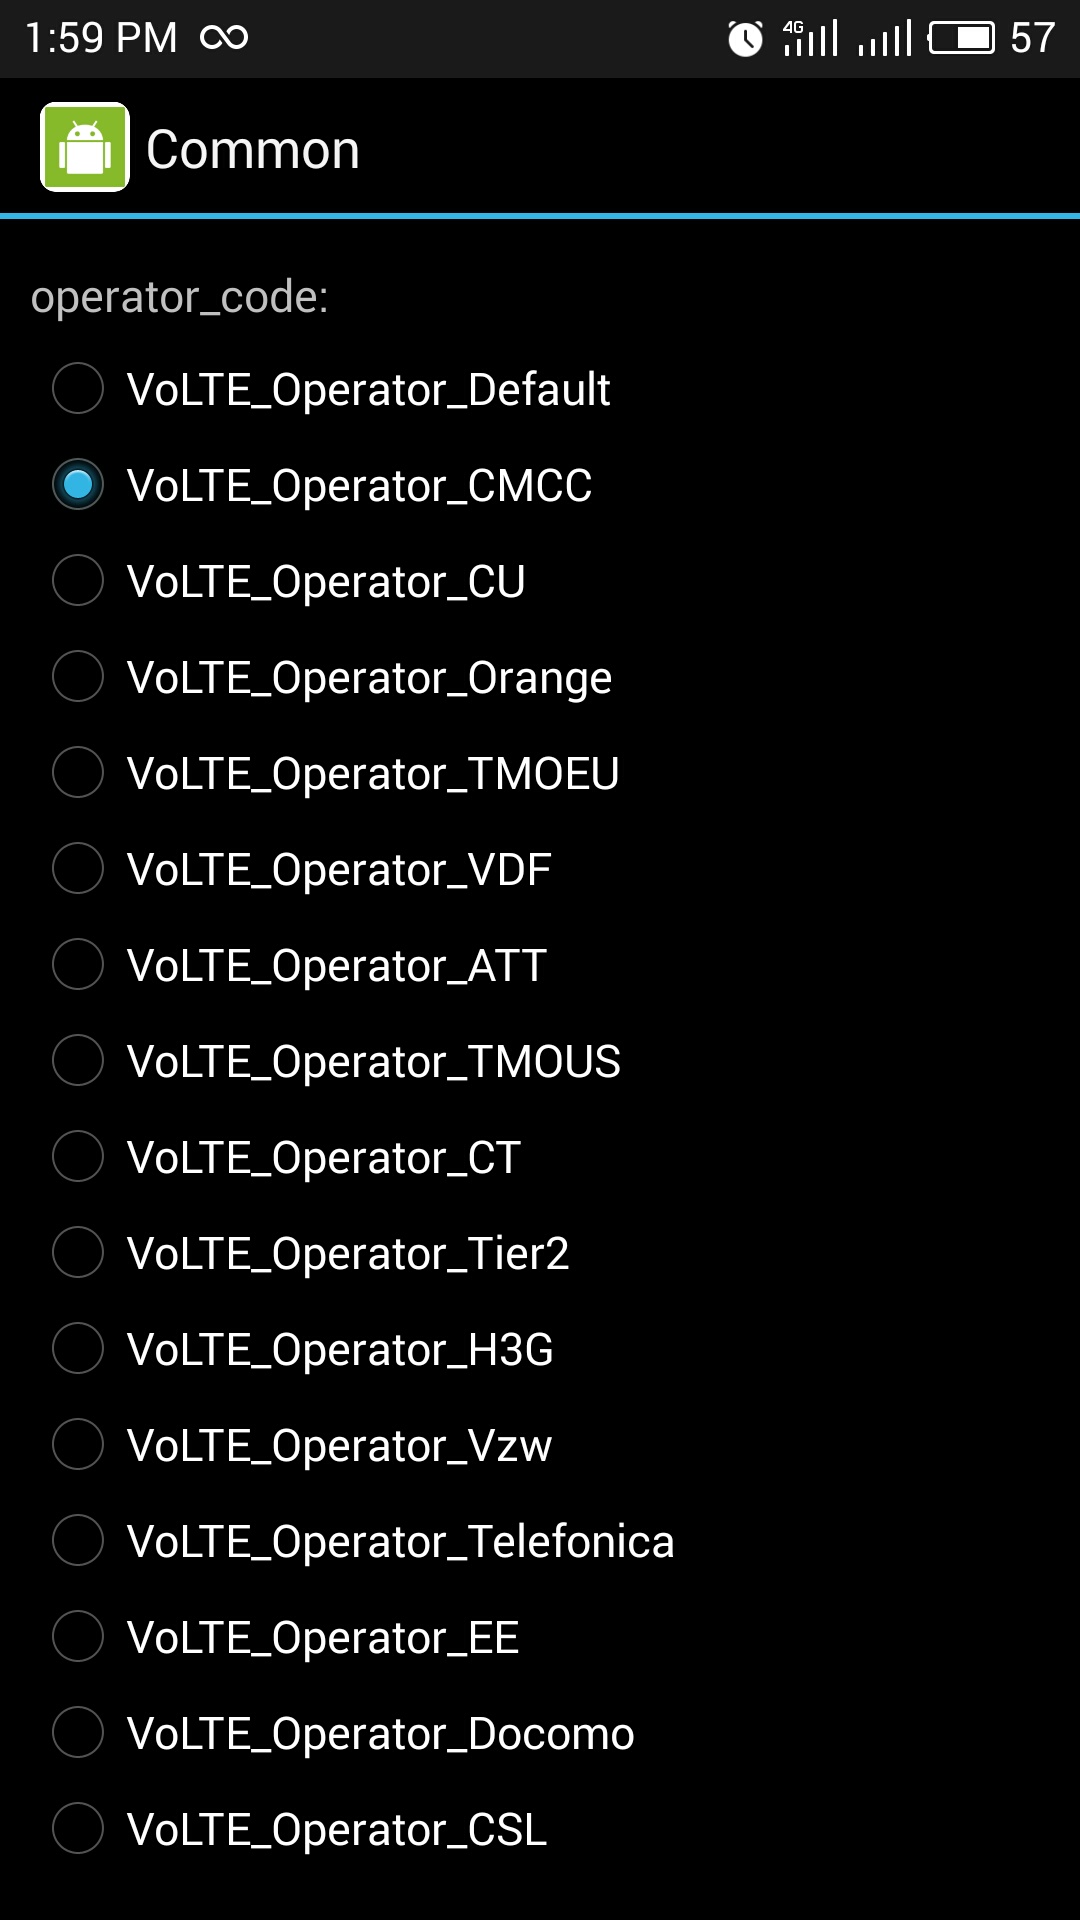 VoLTE_Operator_RJIL